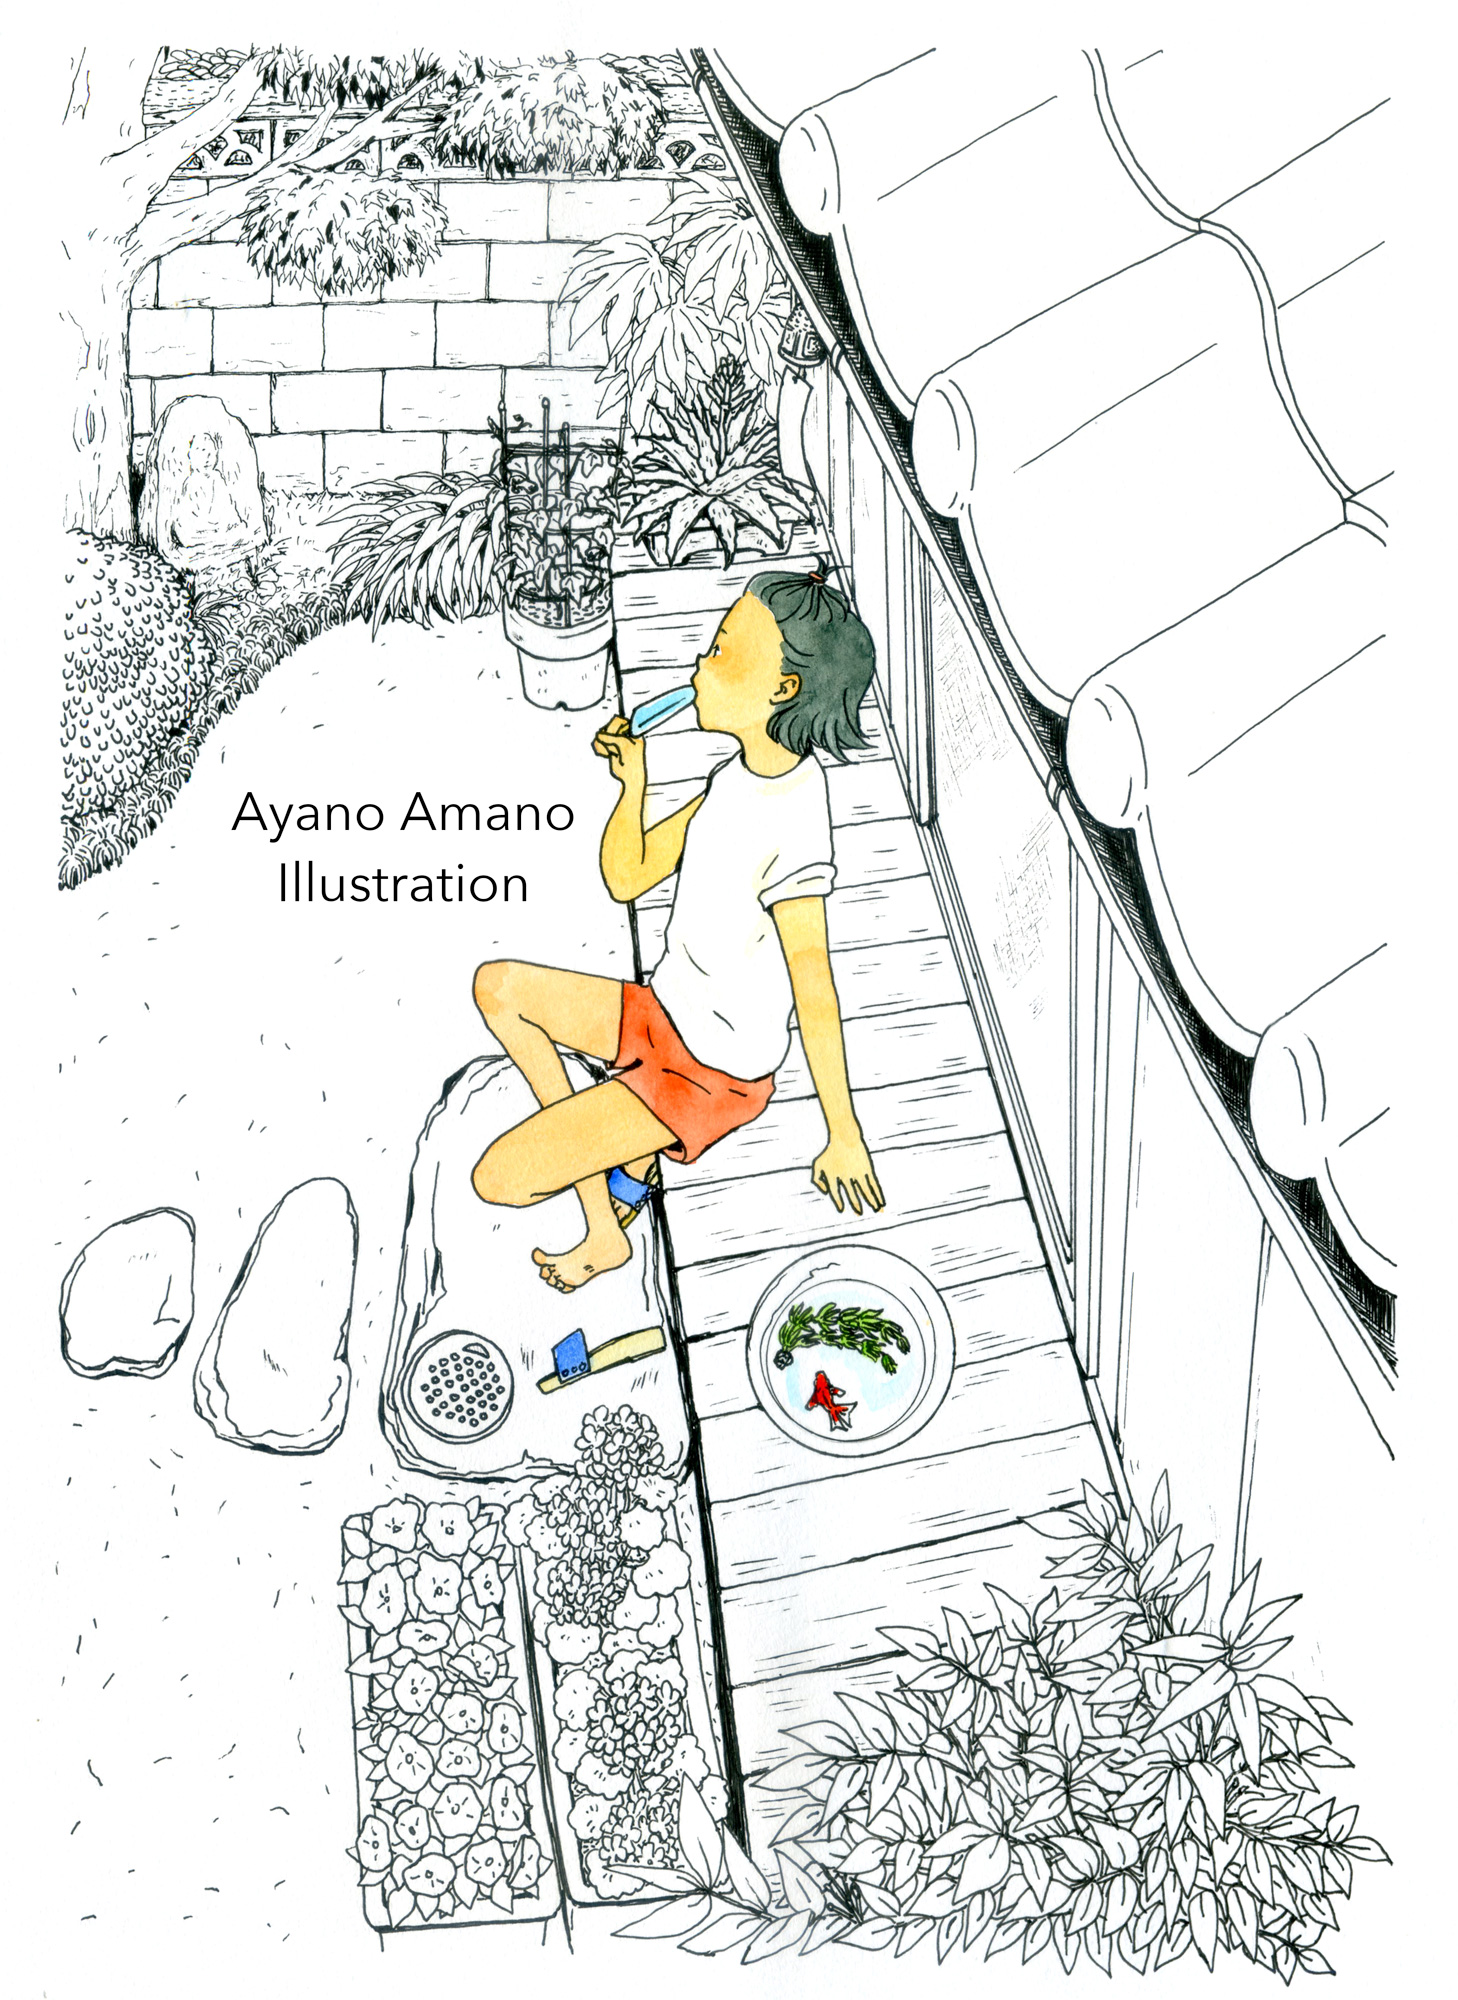 AyanoAmano Illustration